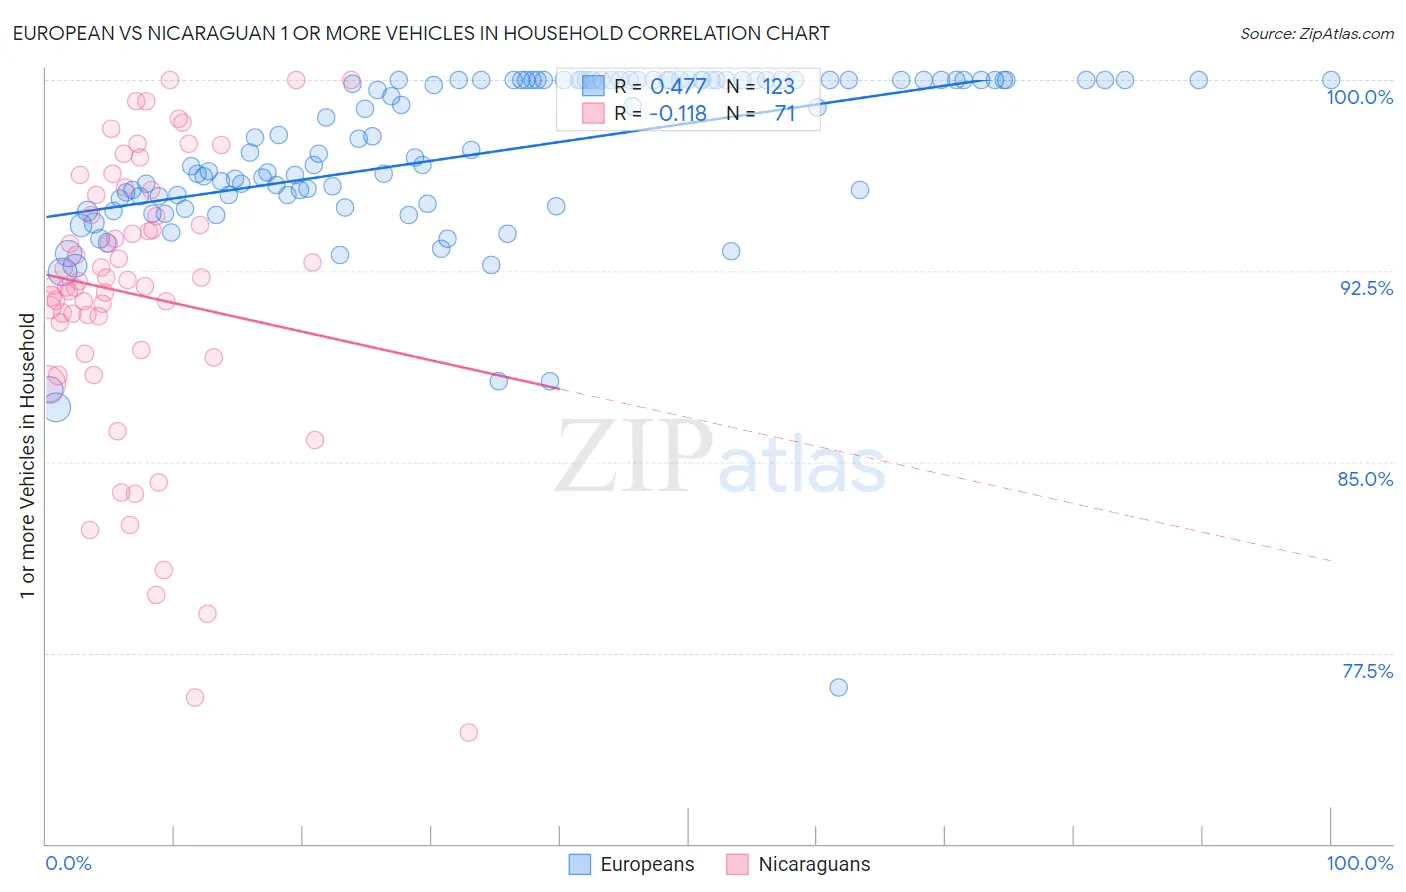 European vs Nicaraguan 1 or more Vehicles in Household